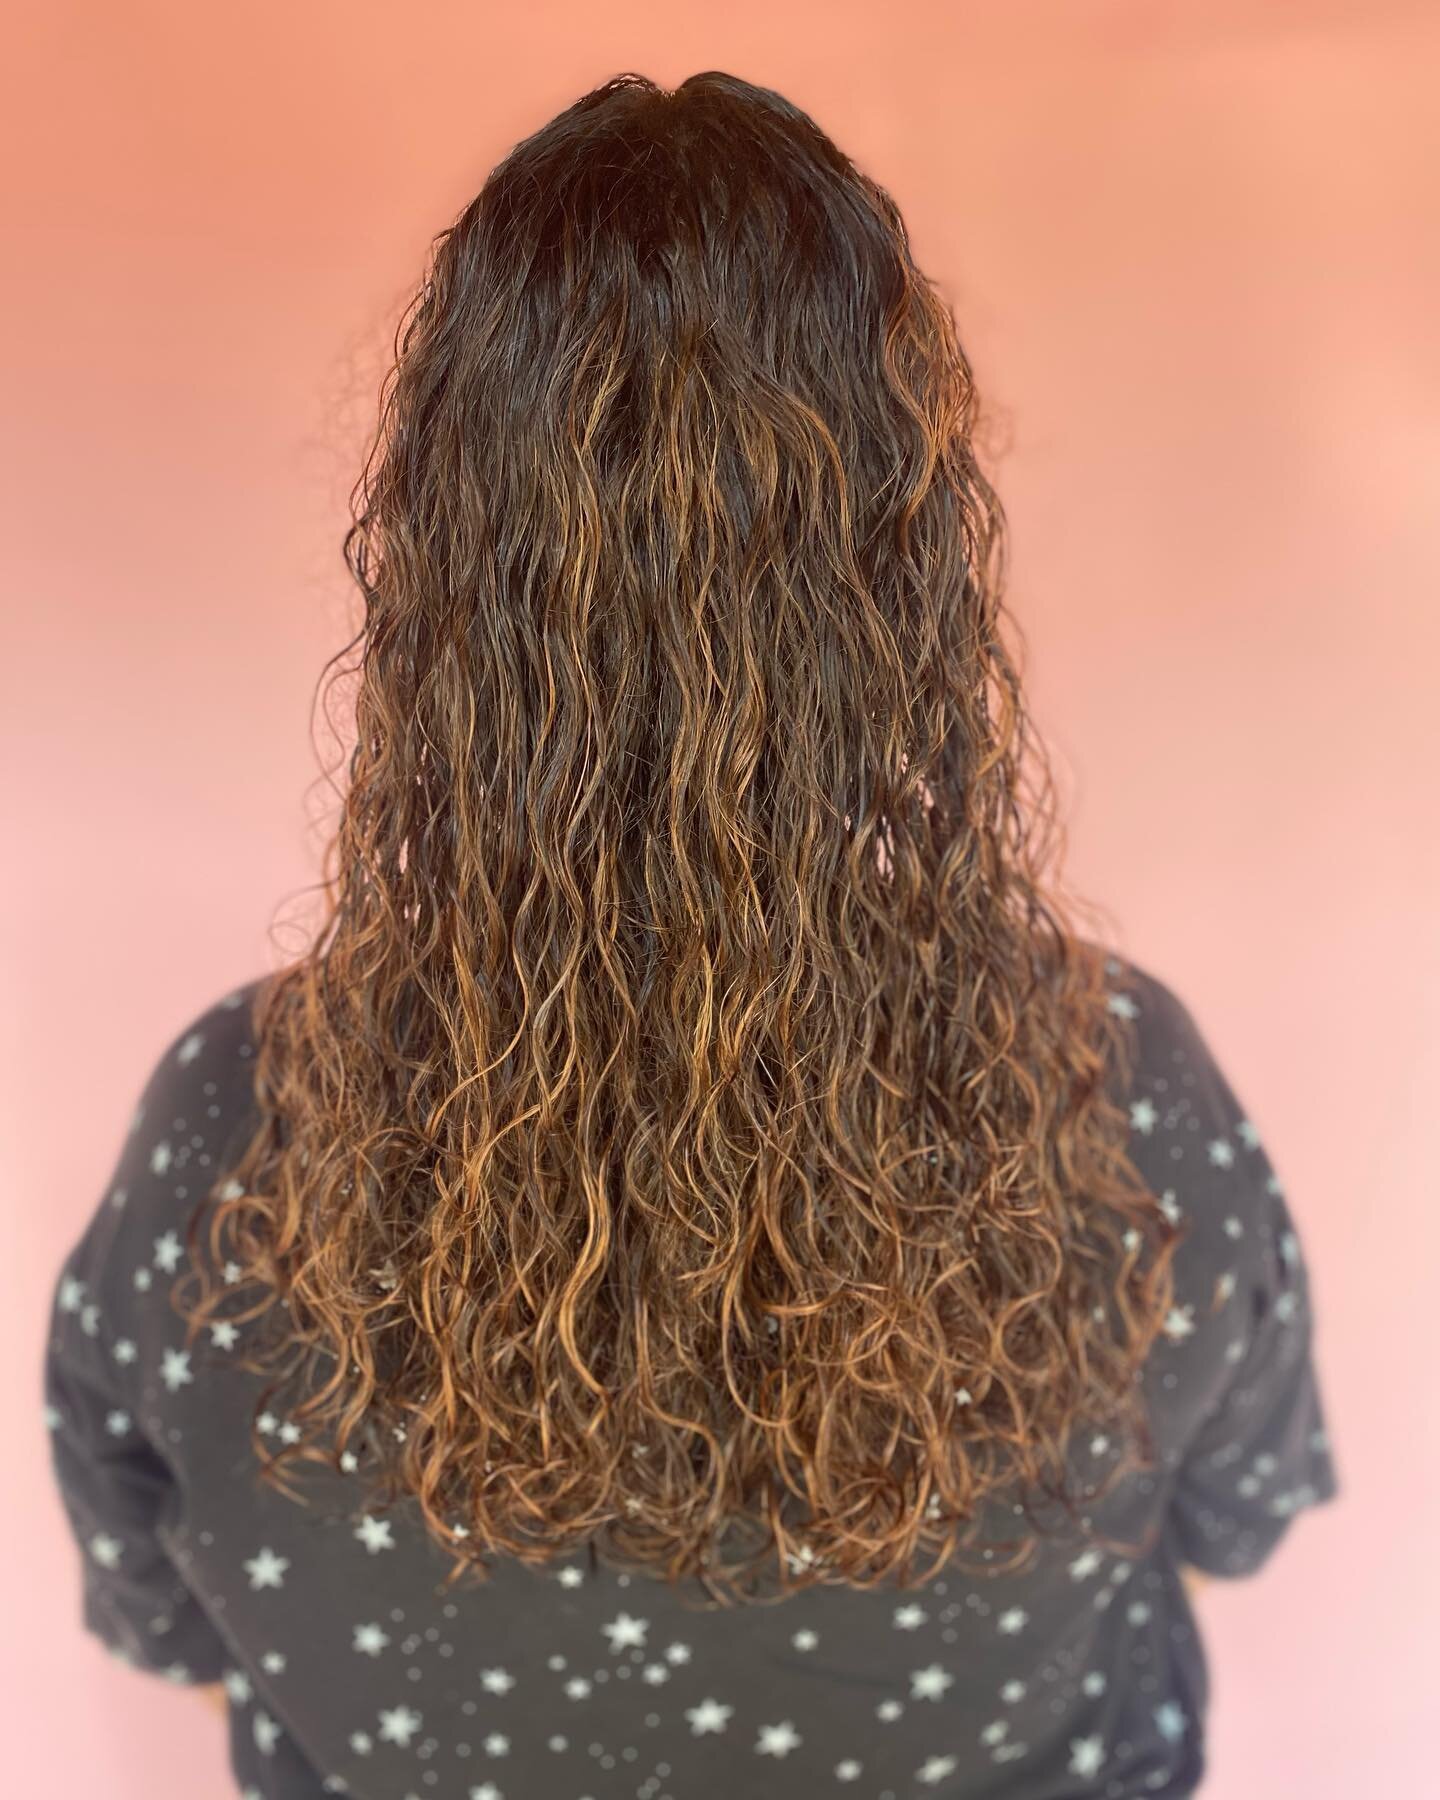 🍁🍂we brought her curls back to life and gave her some fall hair🍂🍁. @theboulevardhaircompany @styledbysilvija @coric6 
#stlcurls #fallbalayage #supportsmallbusiness #webstersalon #bringinghercurlsback.  http://Salonblvd.com/silvija-coric